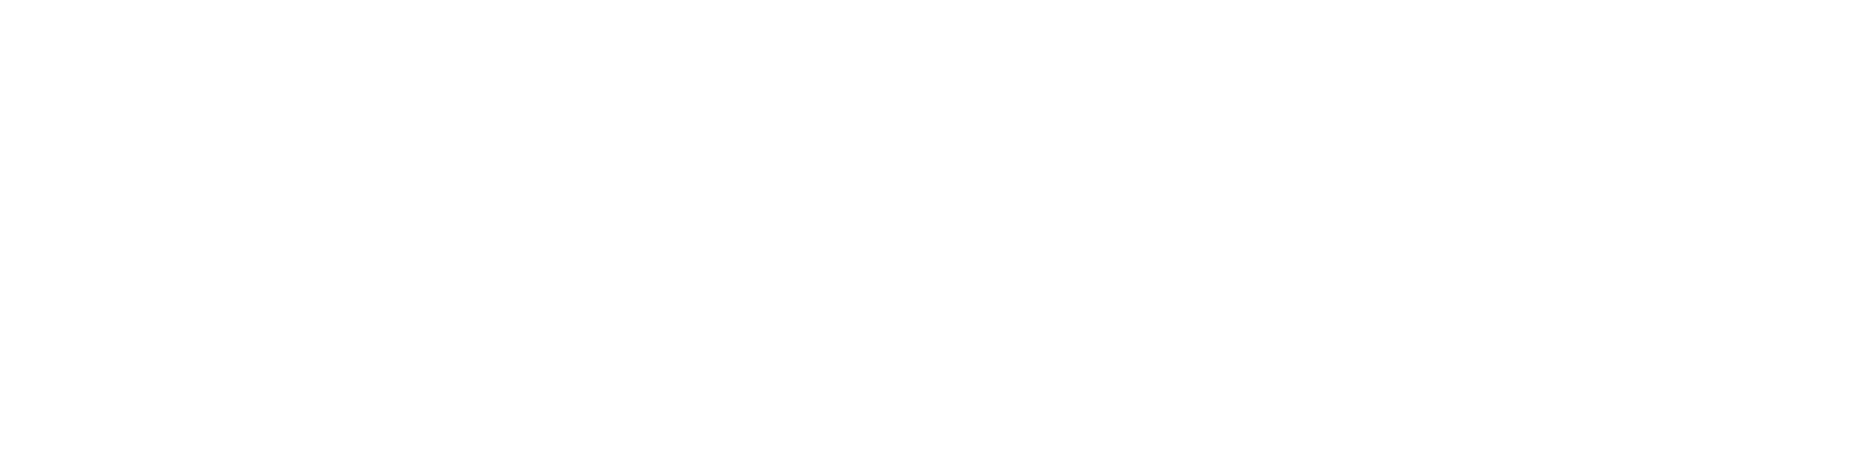 oldice logo